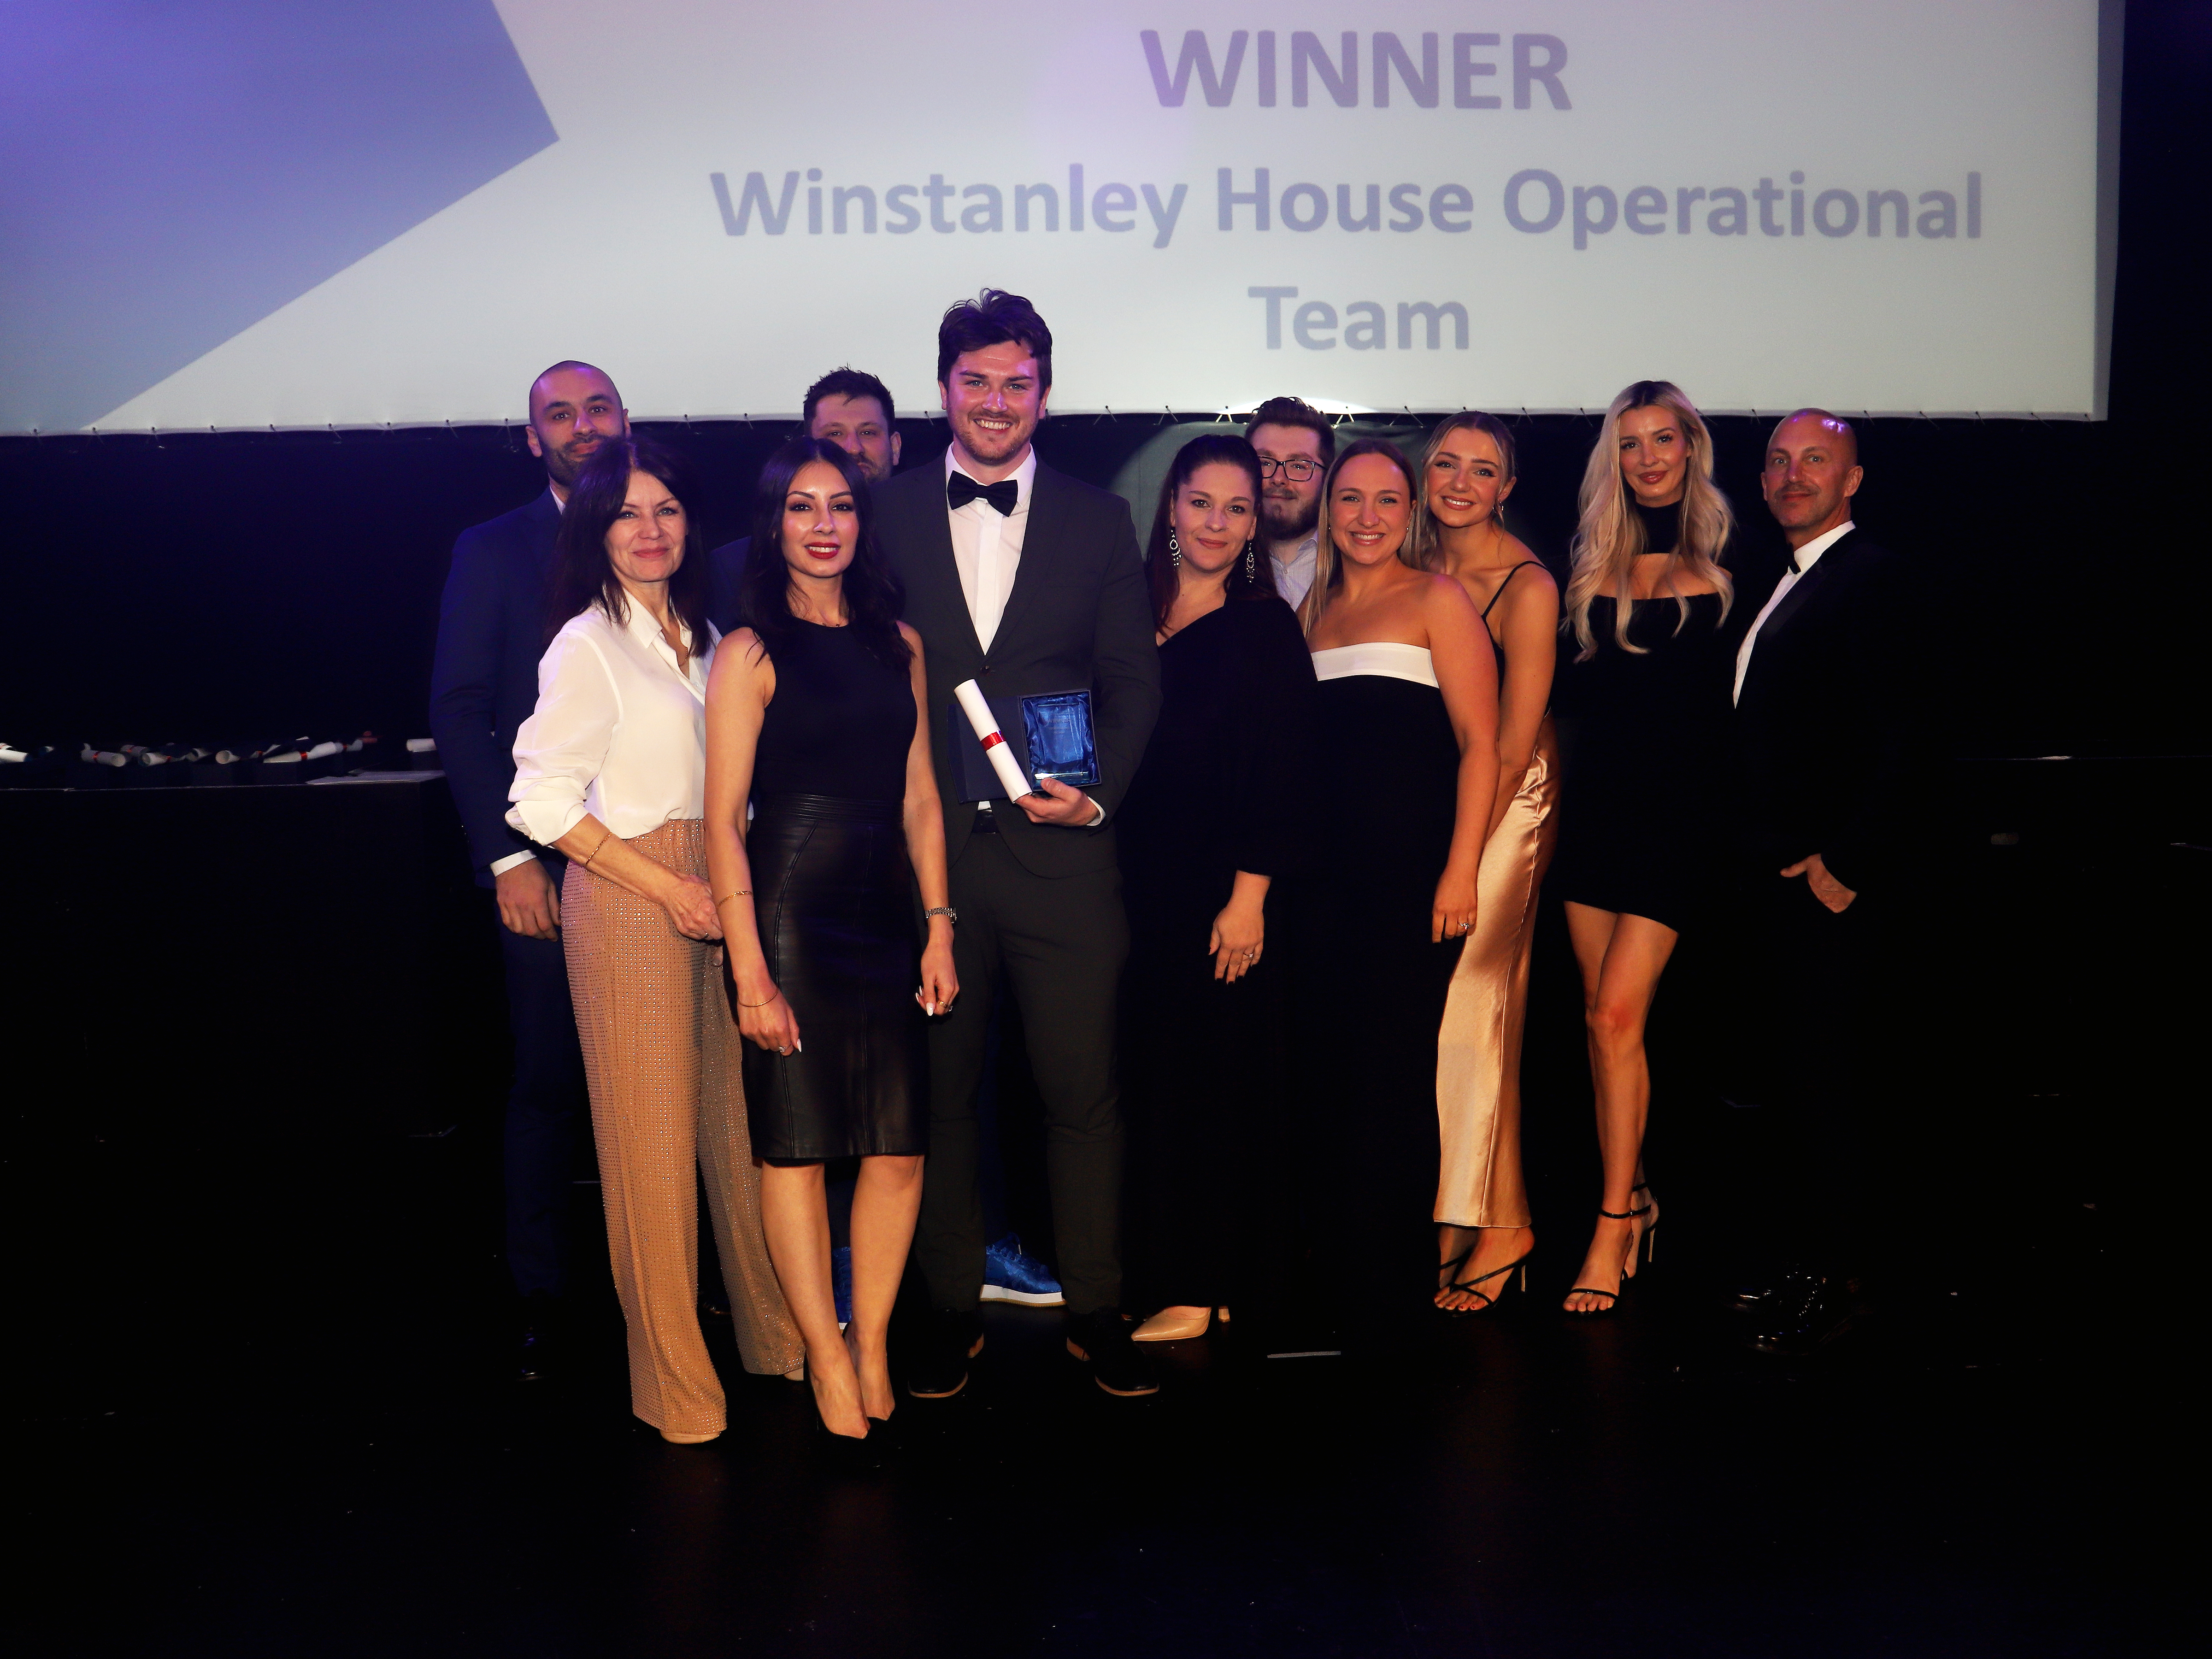 Winstanley House Operations Team - WINNER - Best Team